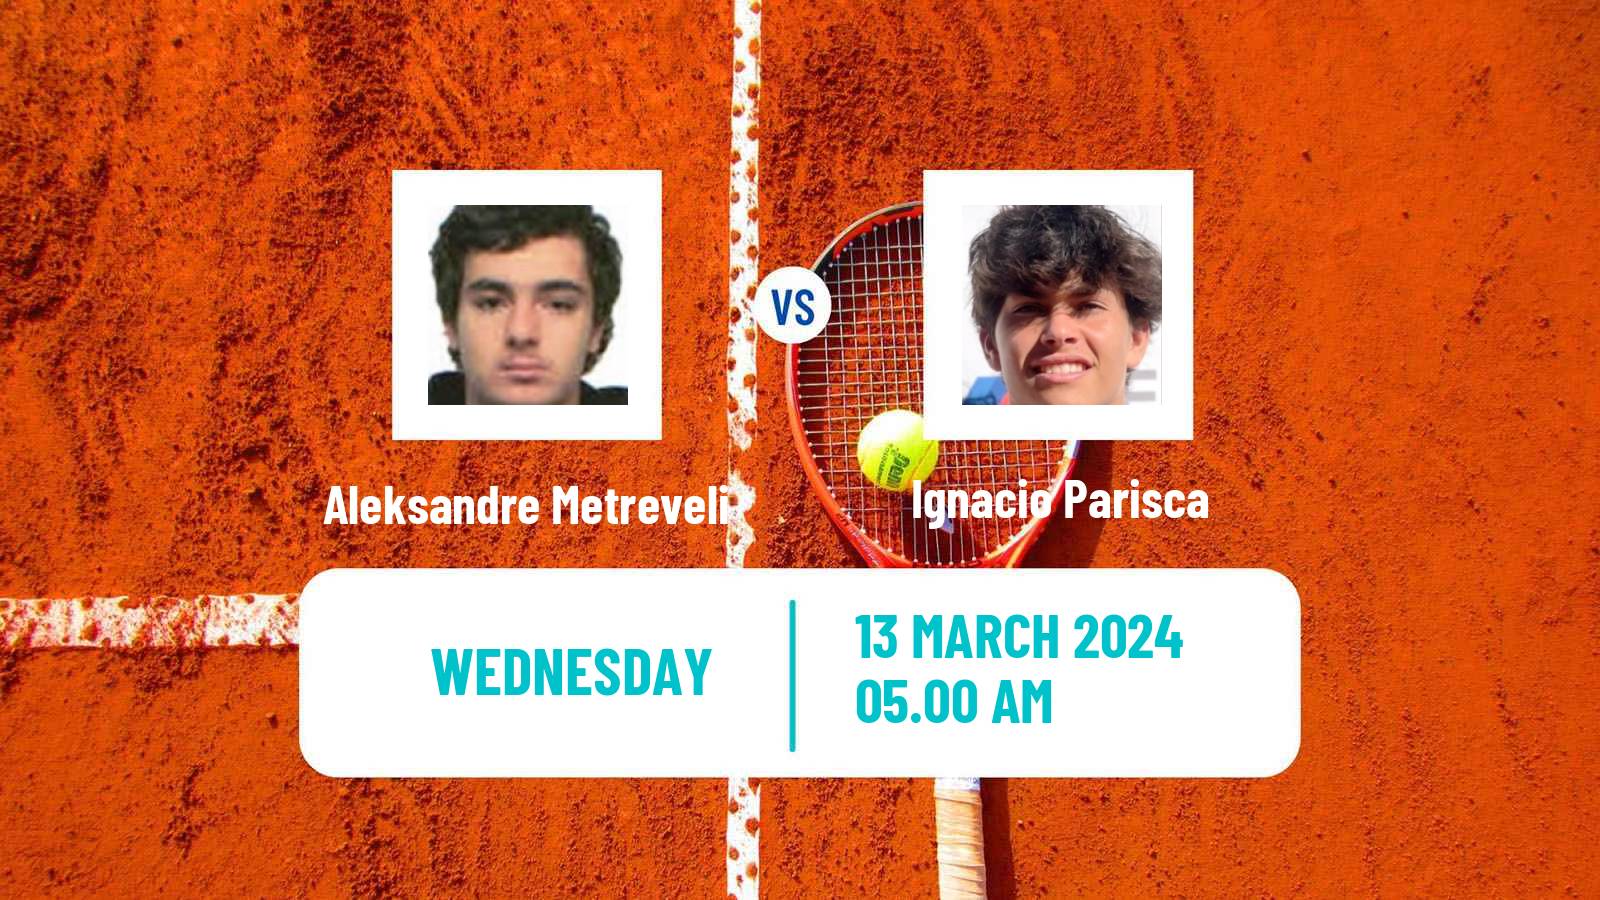 Tennis ITF M15 Antalya 6 Men Aleksandre Metreveli - Ignacio Parisca